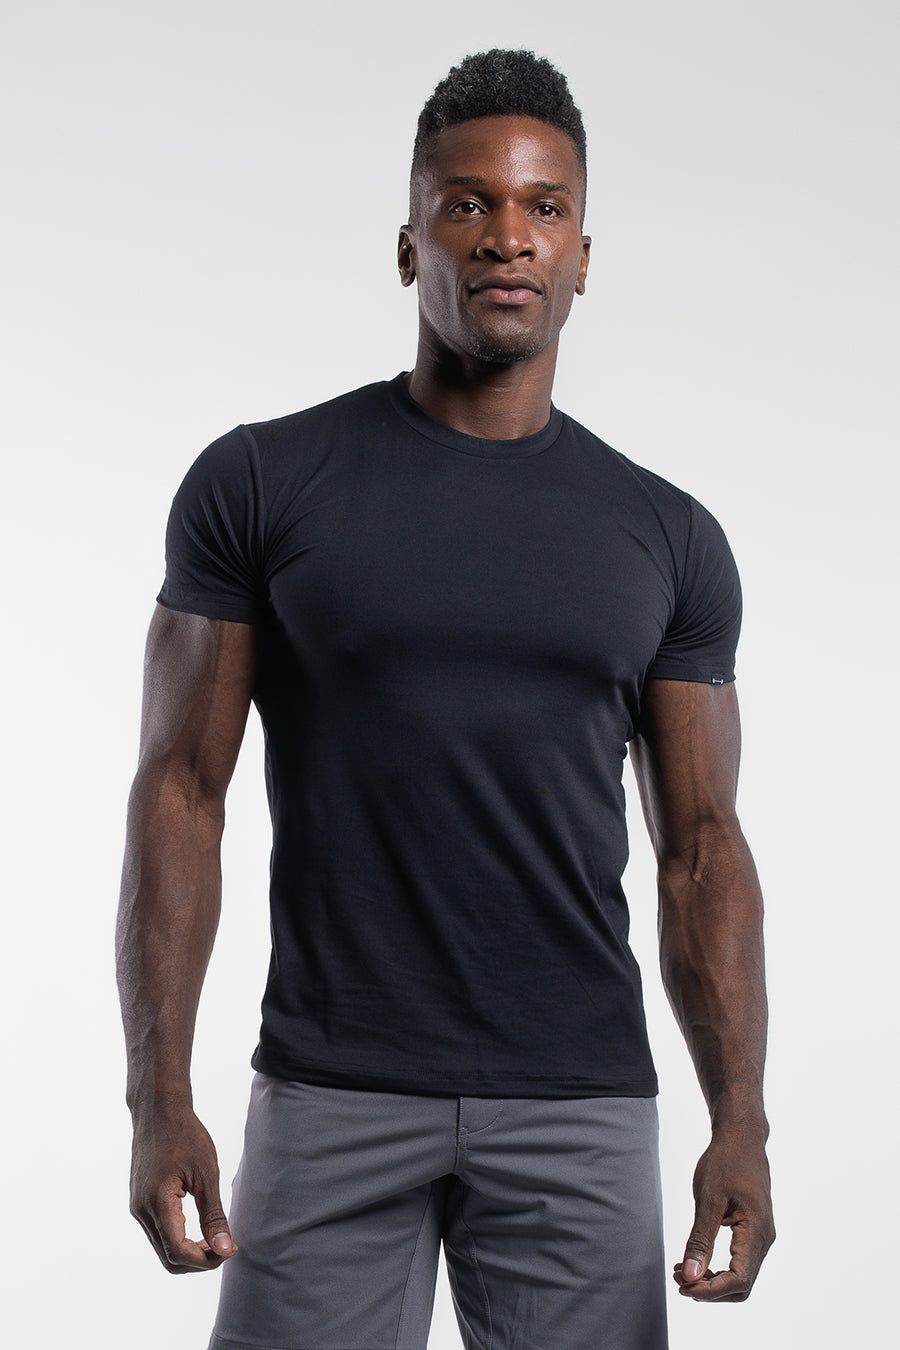 Runhit Men's T-Shirts Short Sleeve Compression Shirts for Men Workout Shirts 